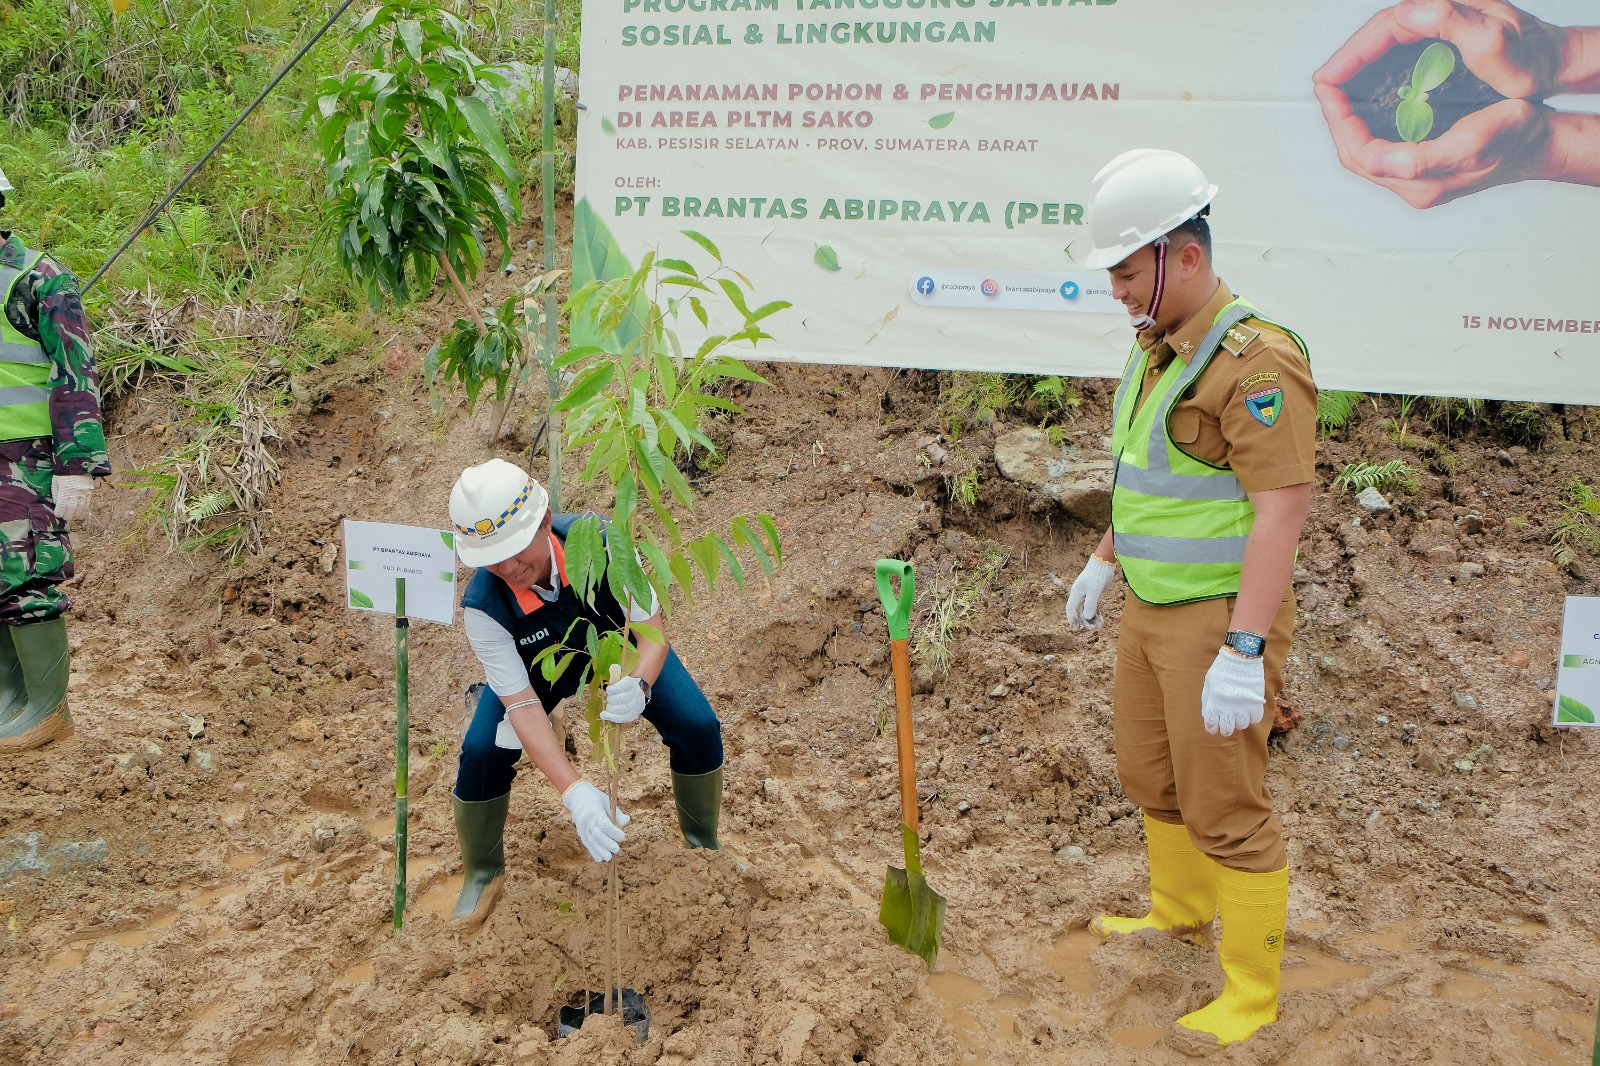 Through its subsidiary, Brantas Abipraya plants tree seedlings in Padang Guci